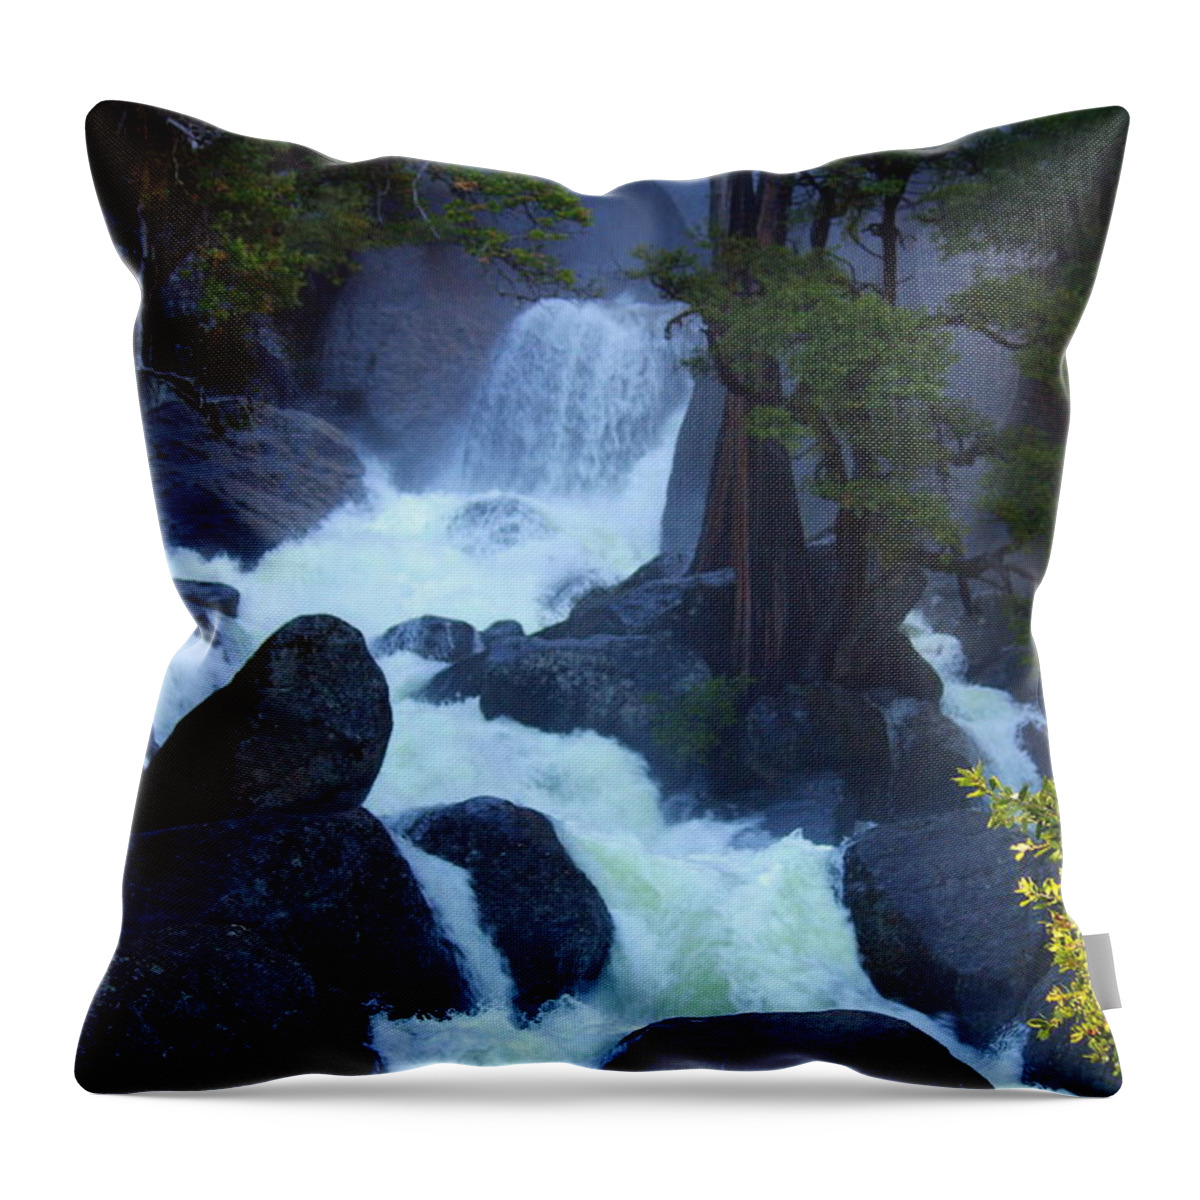 Cascade Falls Throw Pillow featuring the photograph Cascade Falls by Patrick Witz